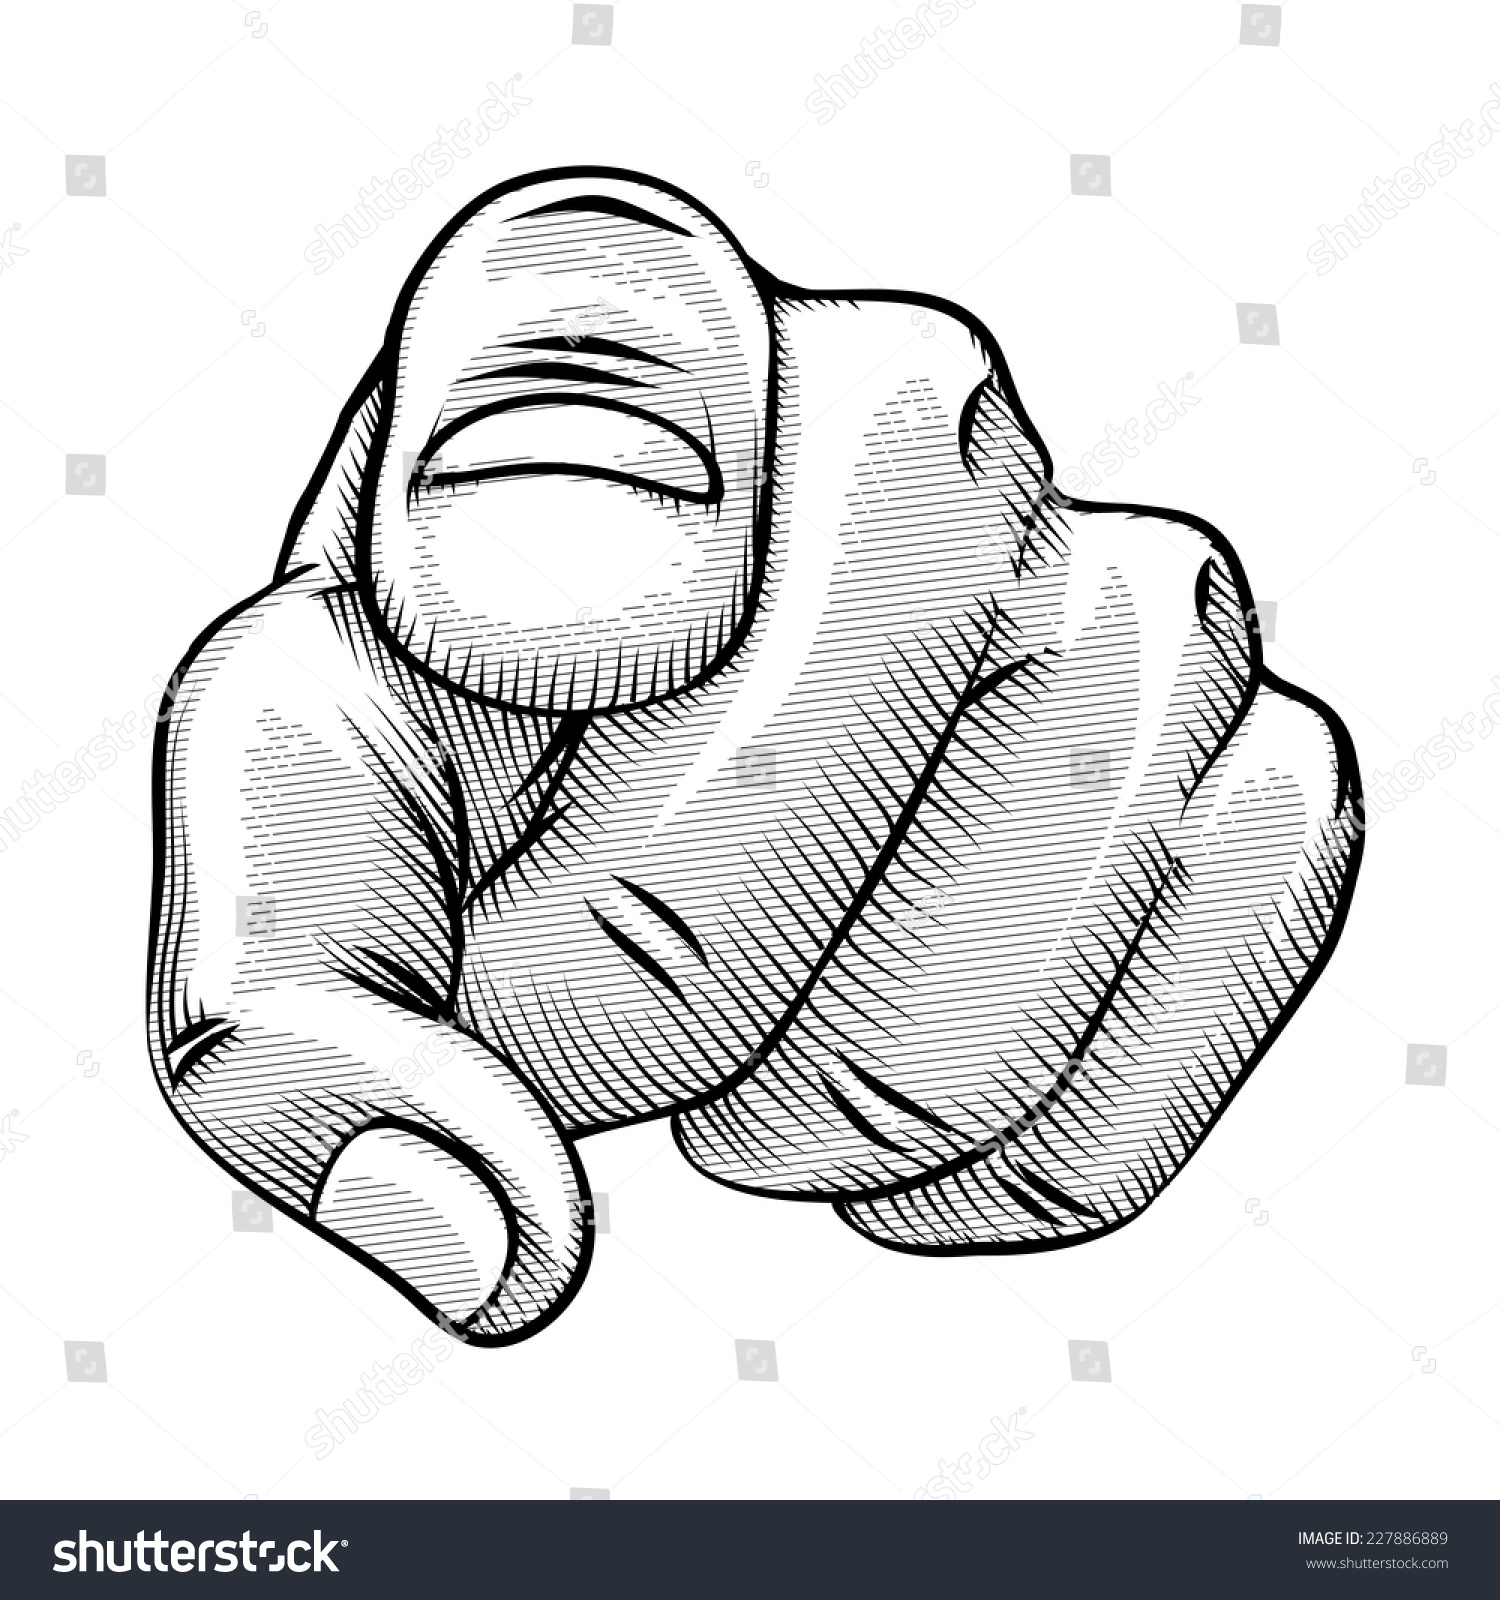 Vetor stock de Retro Line Drawing Pointing Finger Human (livre de